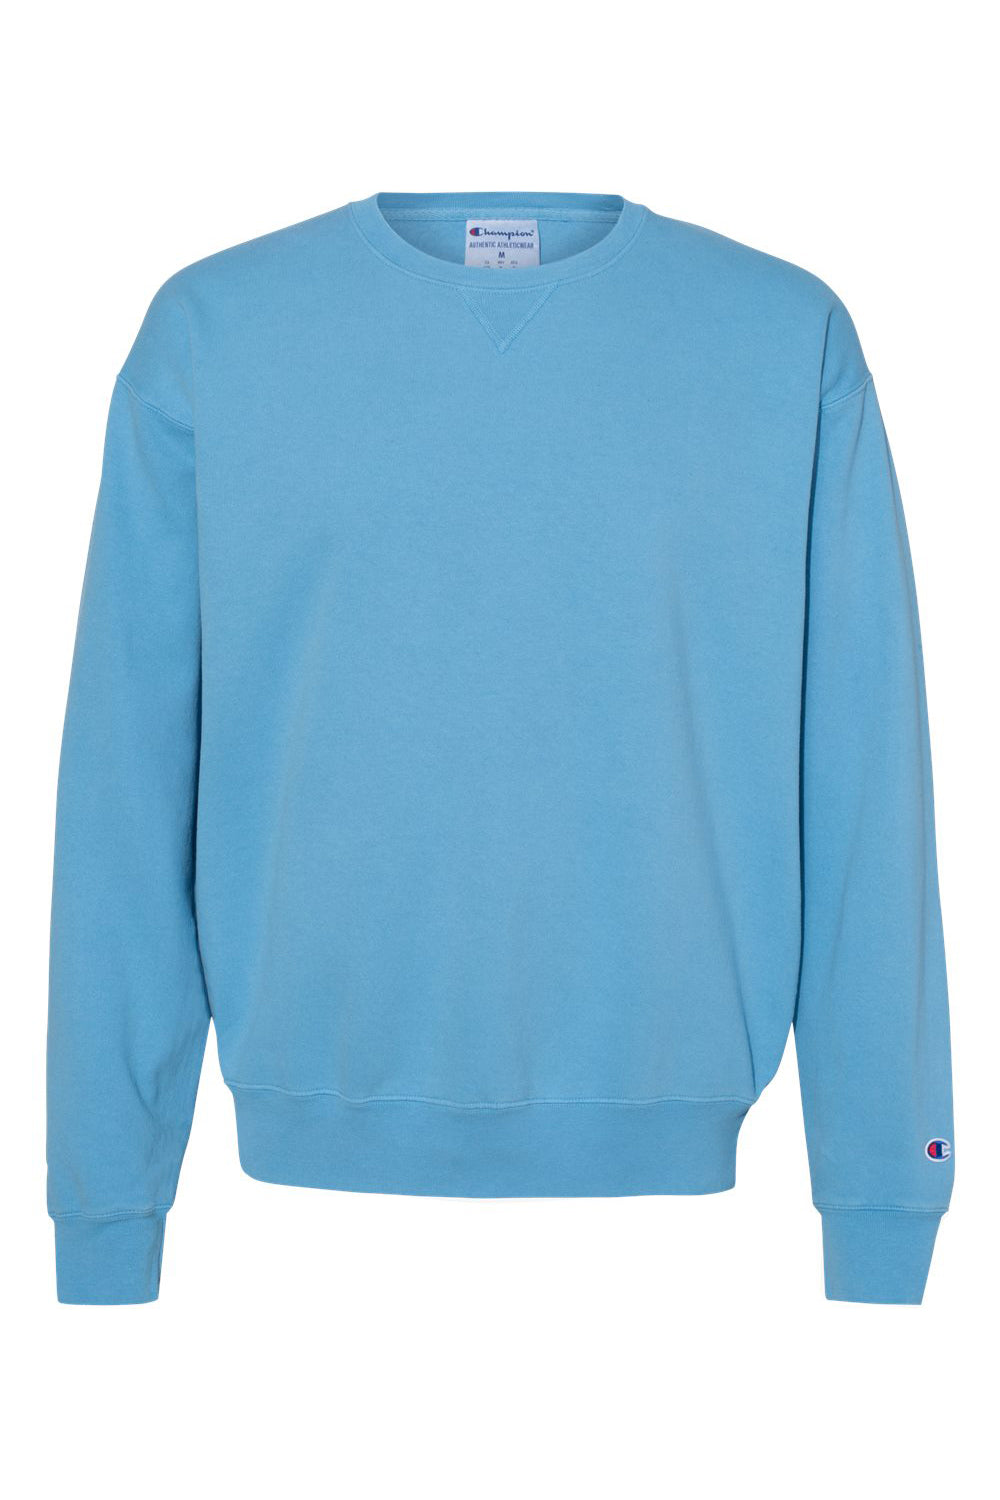 Champion CD400 Mens Garment Dyed Crewneck Sweatshirt Delicate Blue Flat Front